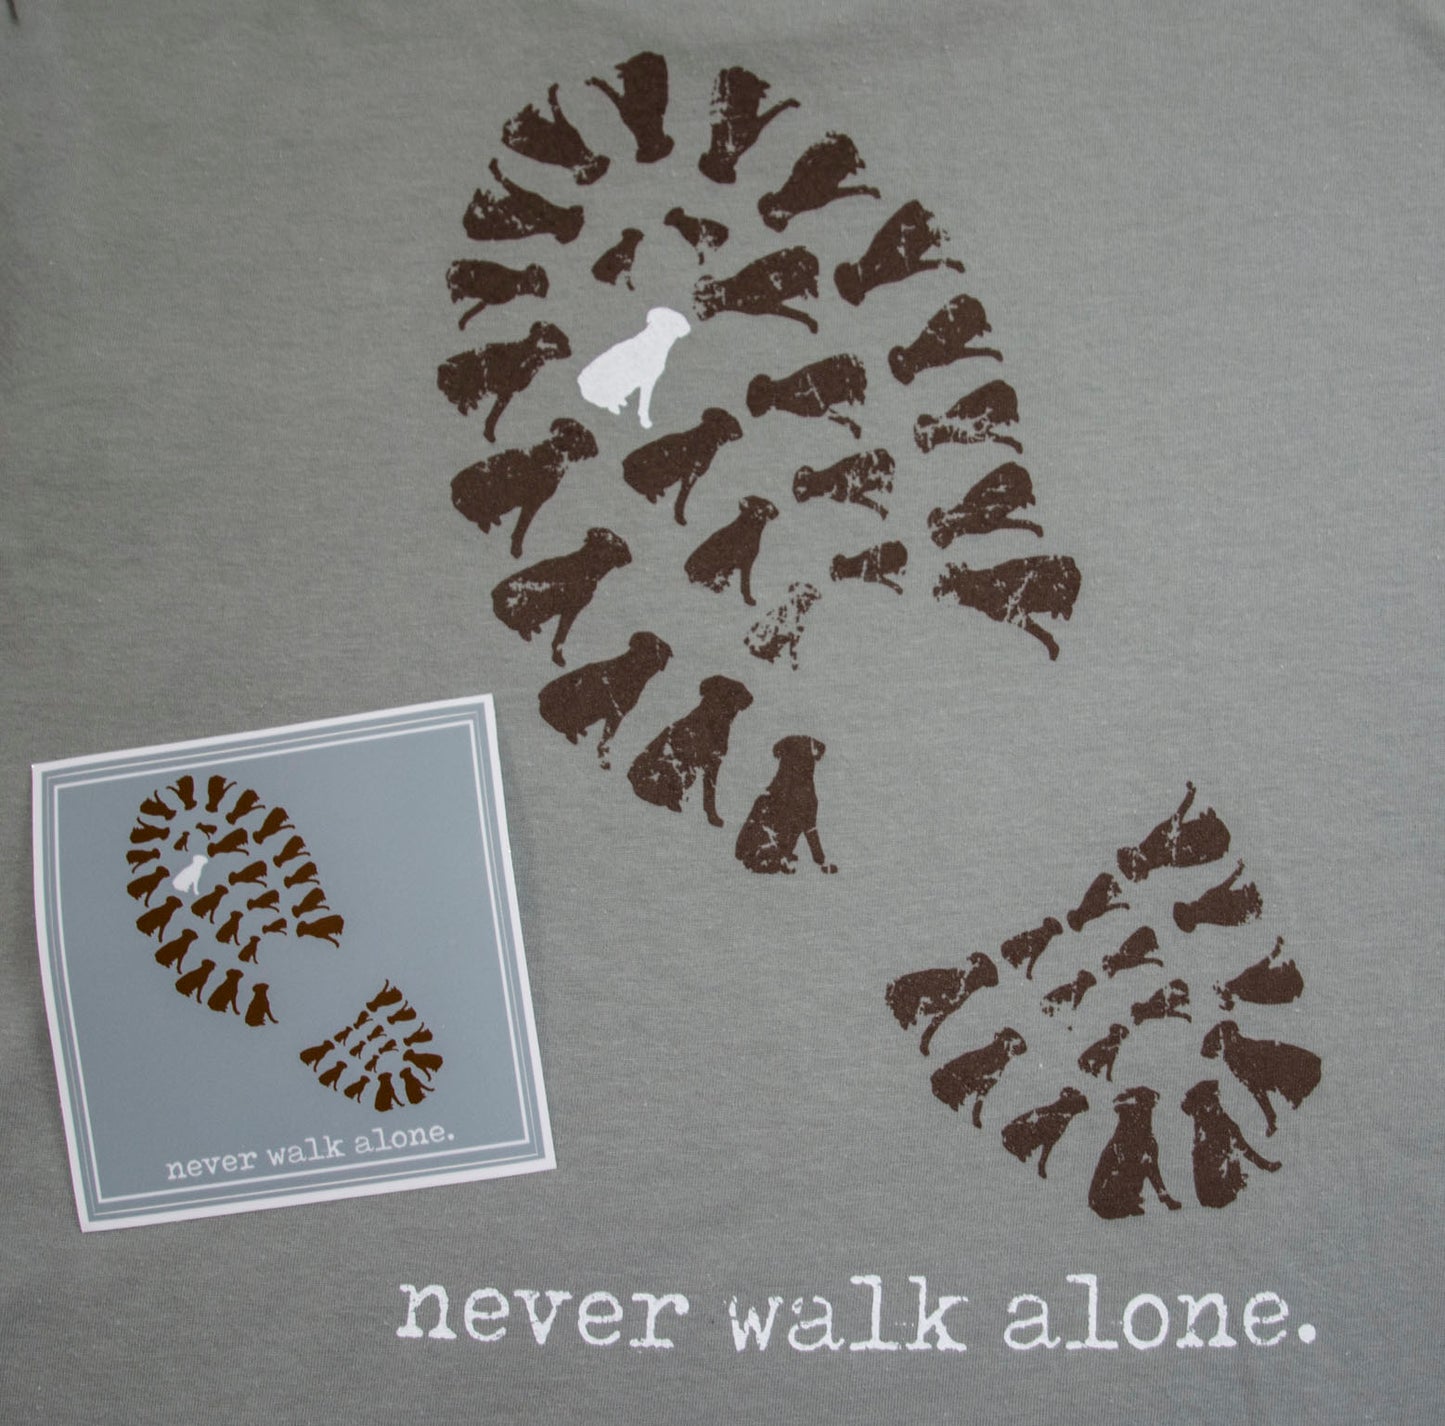 Never Walk Alone- Short Sleeve T-Shirt